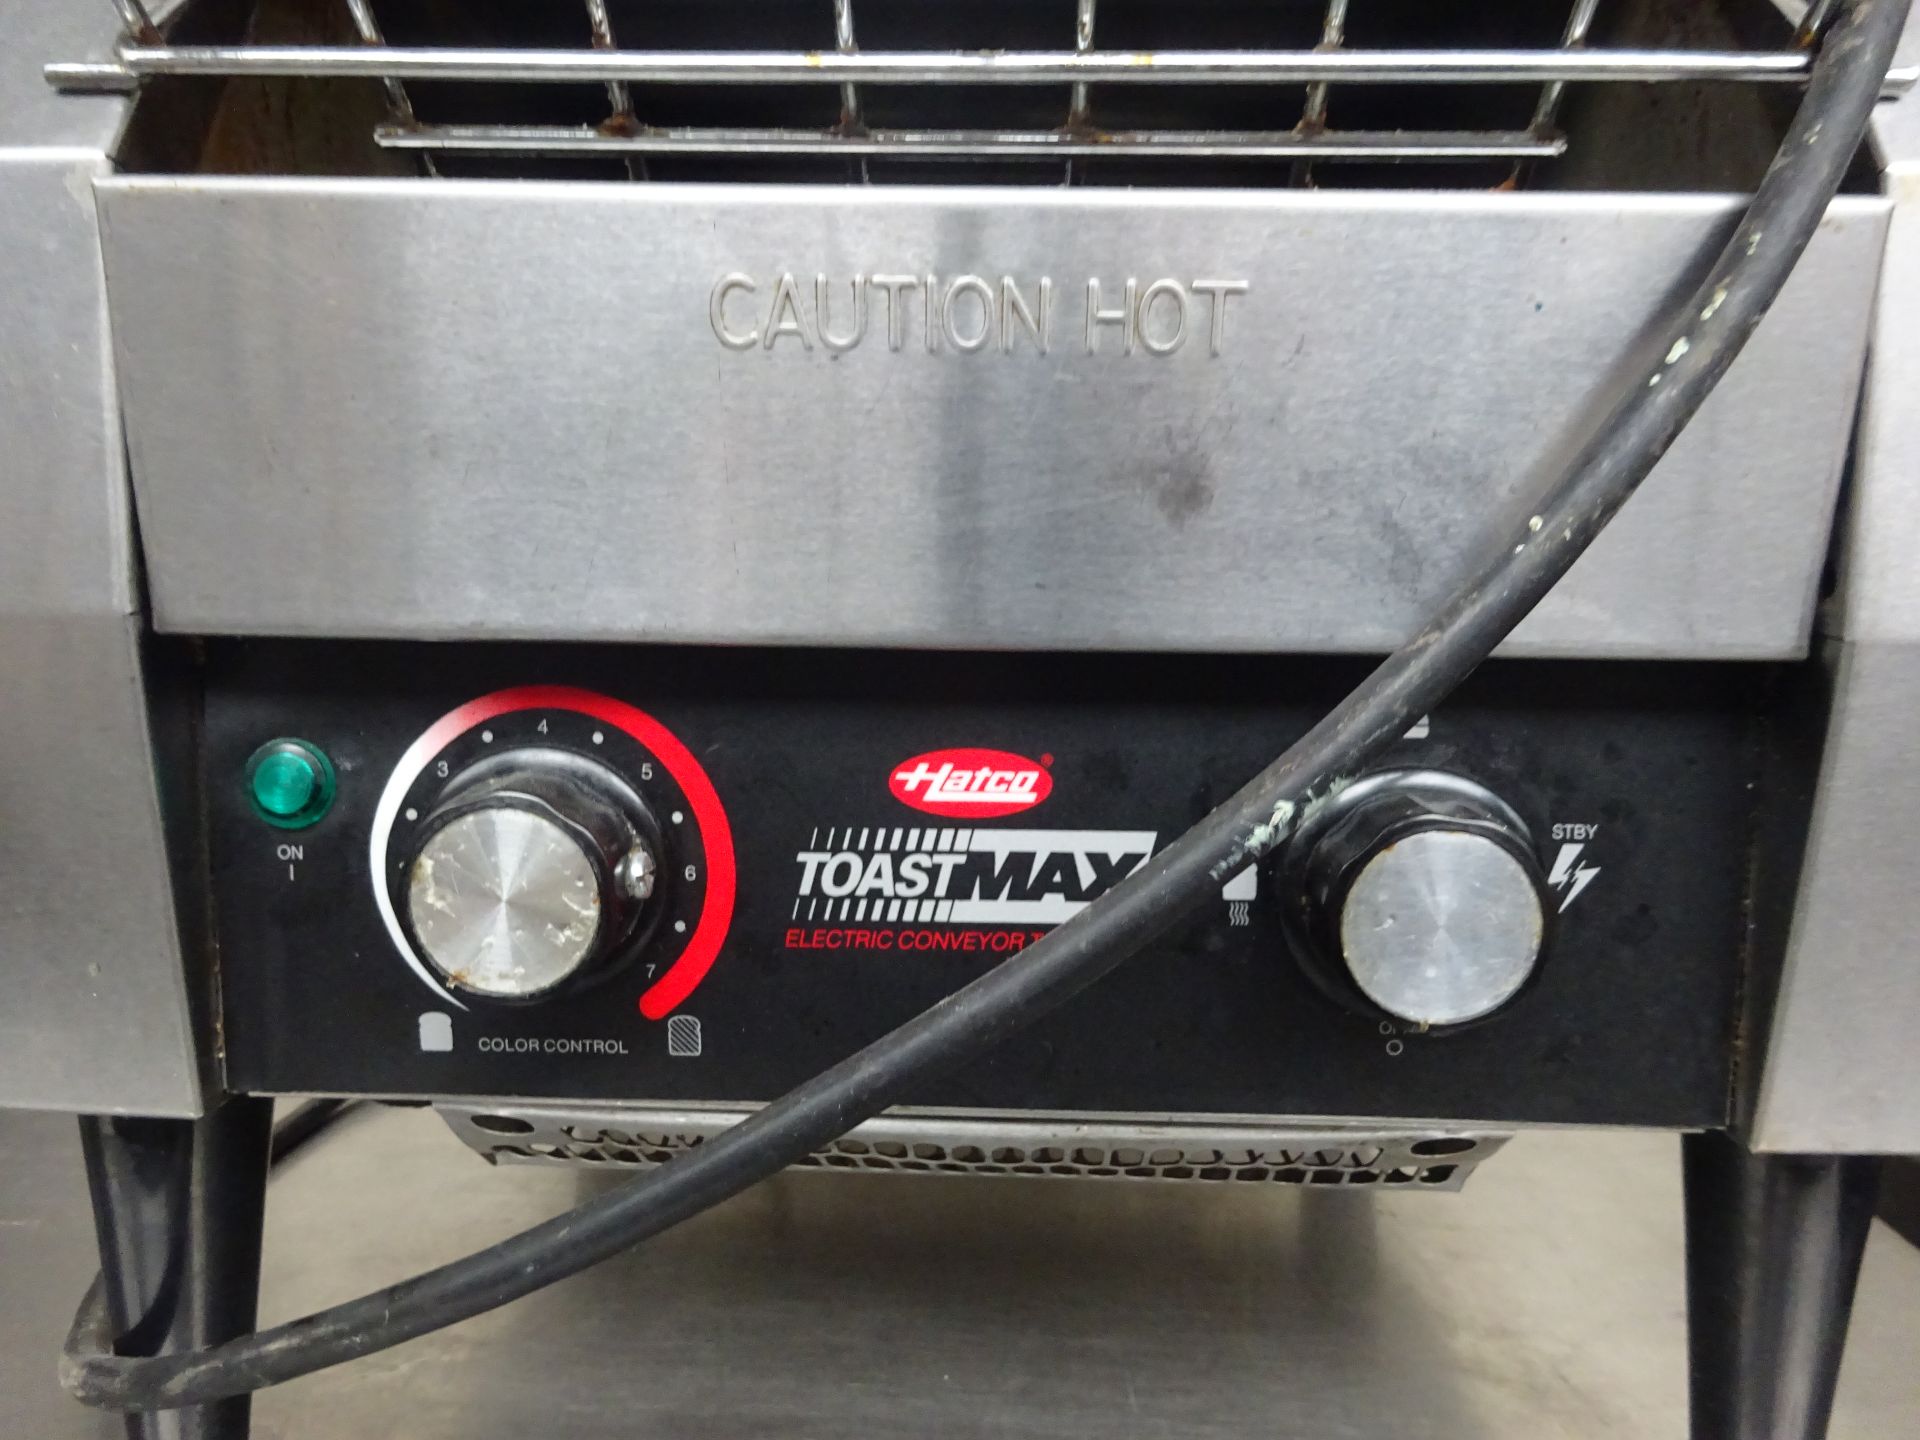 Hatco rotary toaster - Image 2 of 2